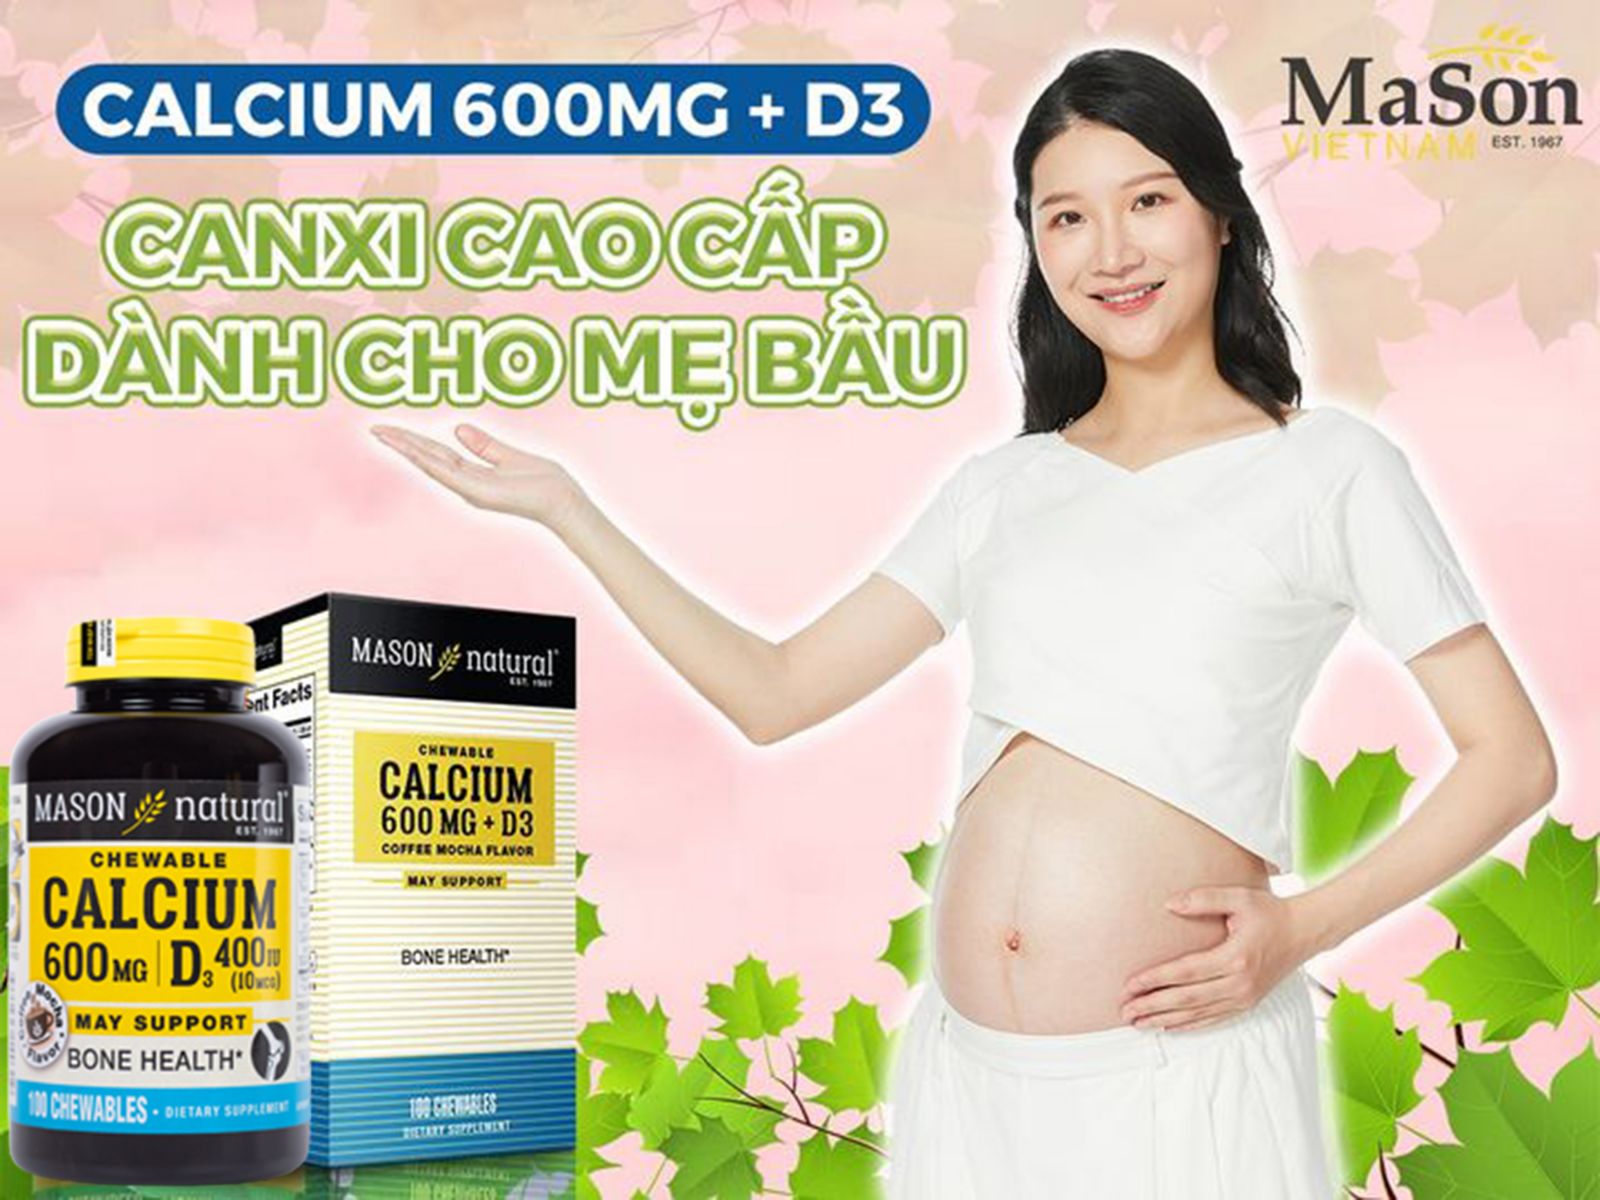 Mason Natural Calcium 600mg + D3.